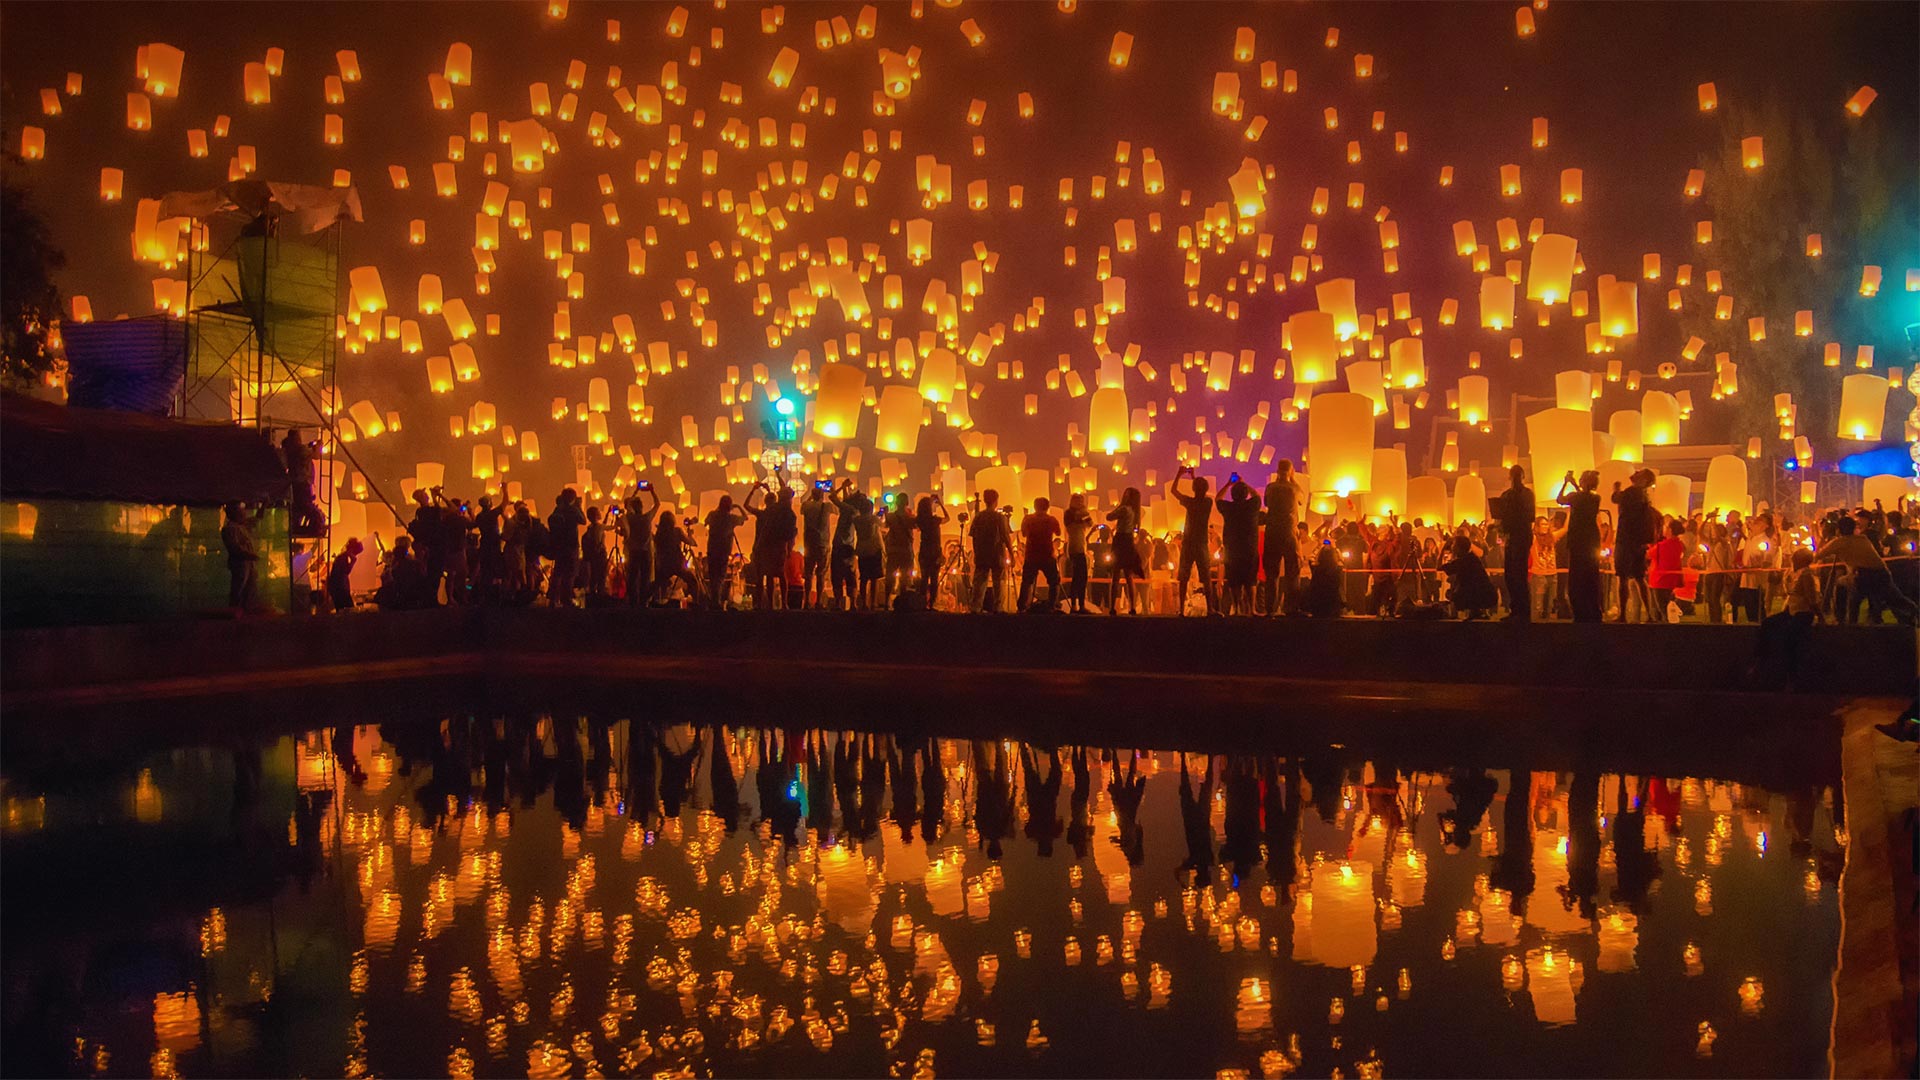 Sky lanterns take flight during the Yi Peng Festival in Chiang Mai